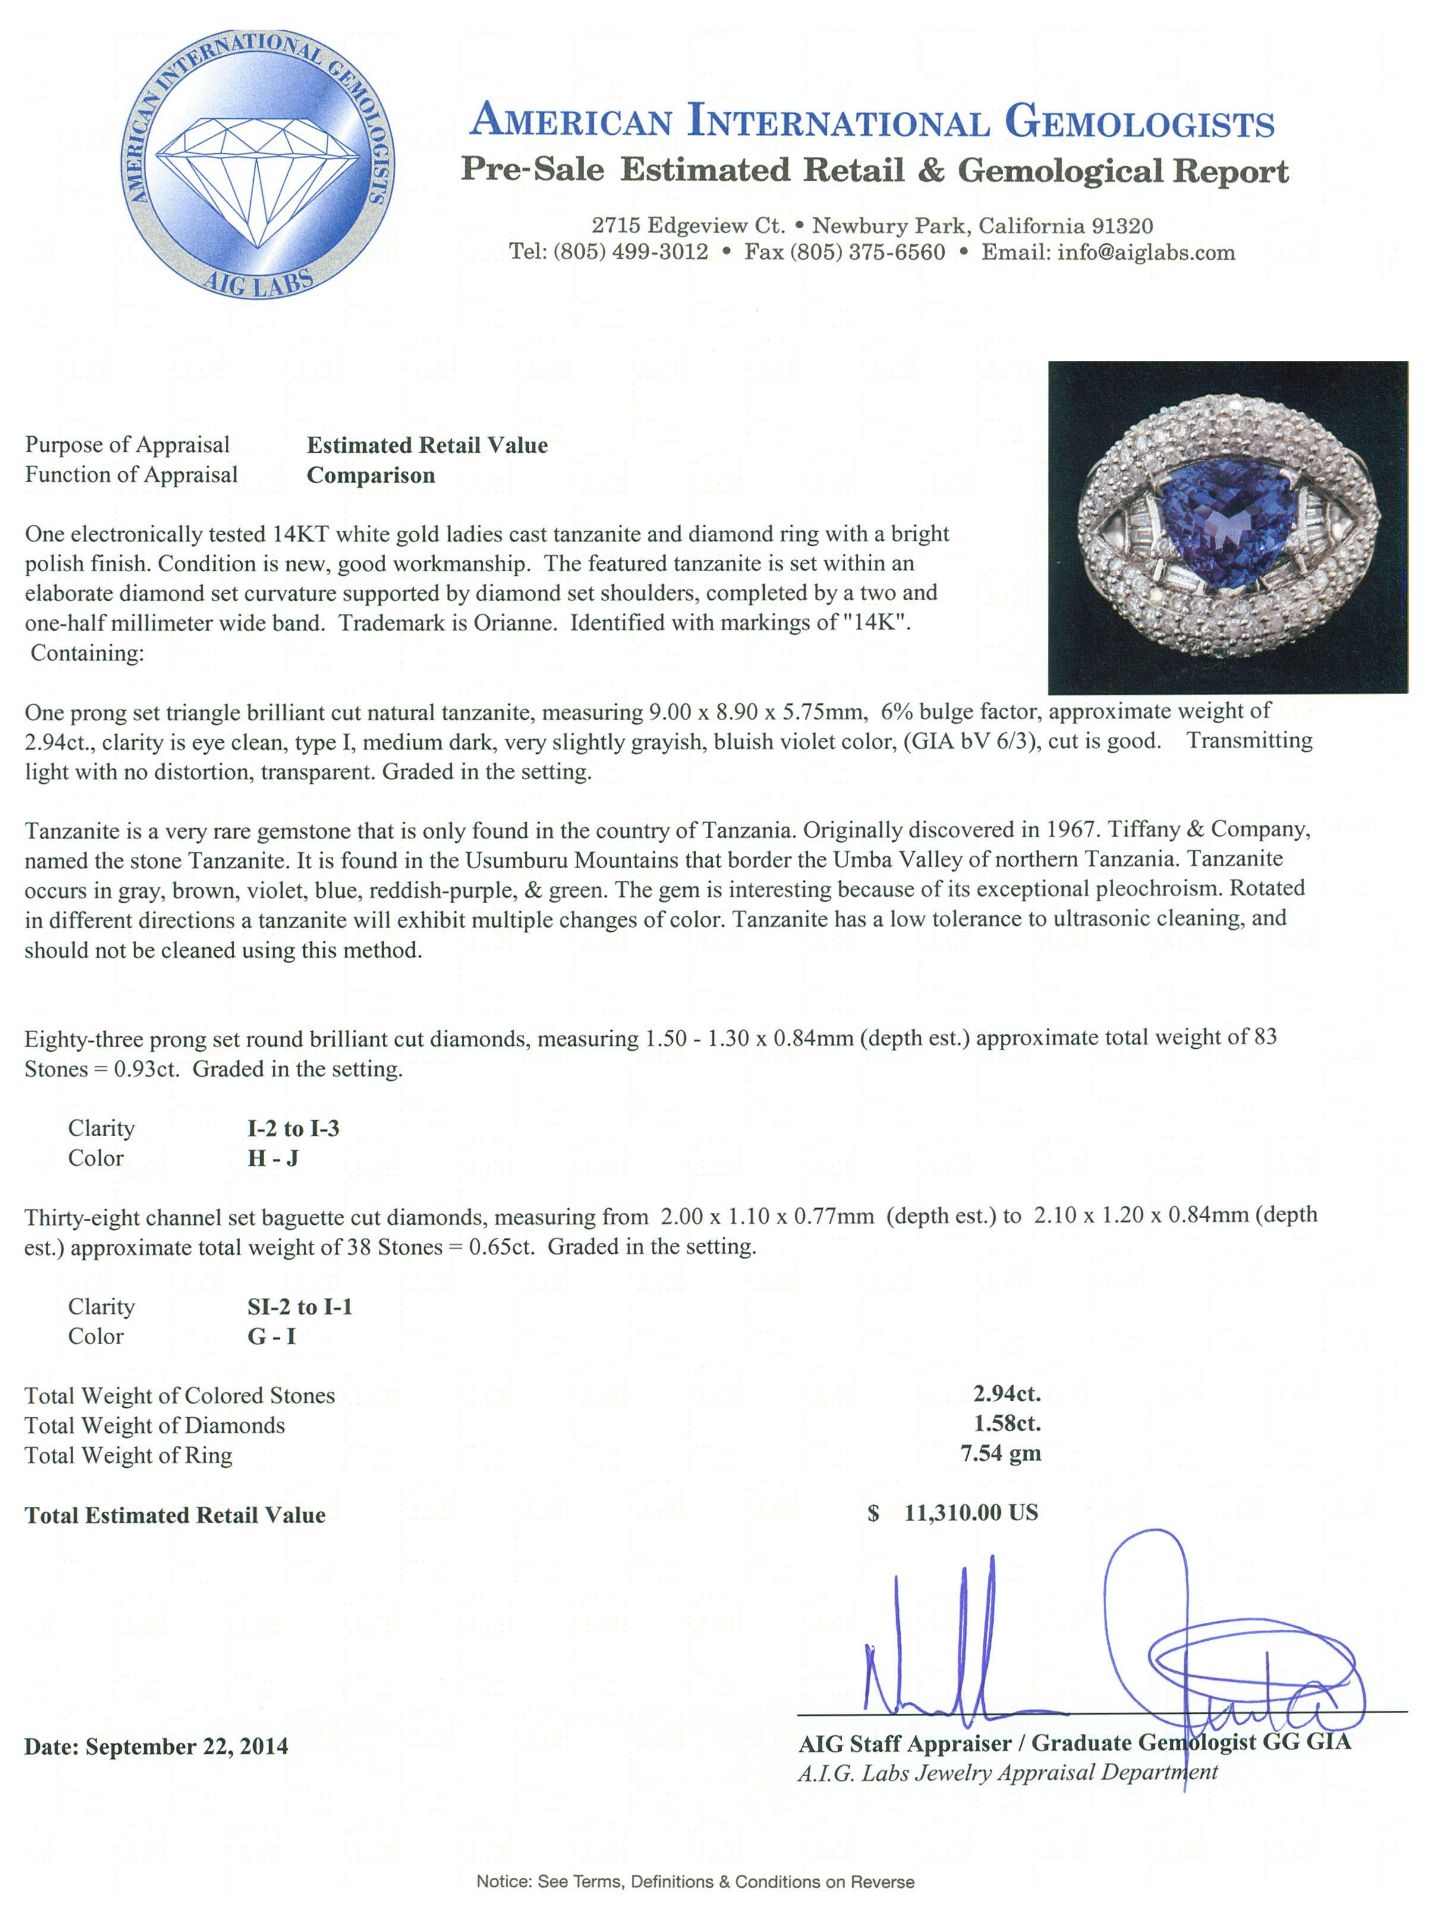 14KT White Gold 2.94 ctw Tanzanite and Diamond Ring - Image 5 of 5